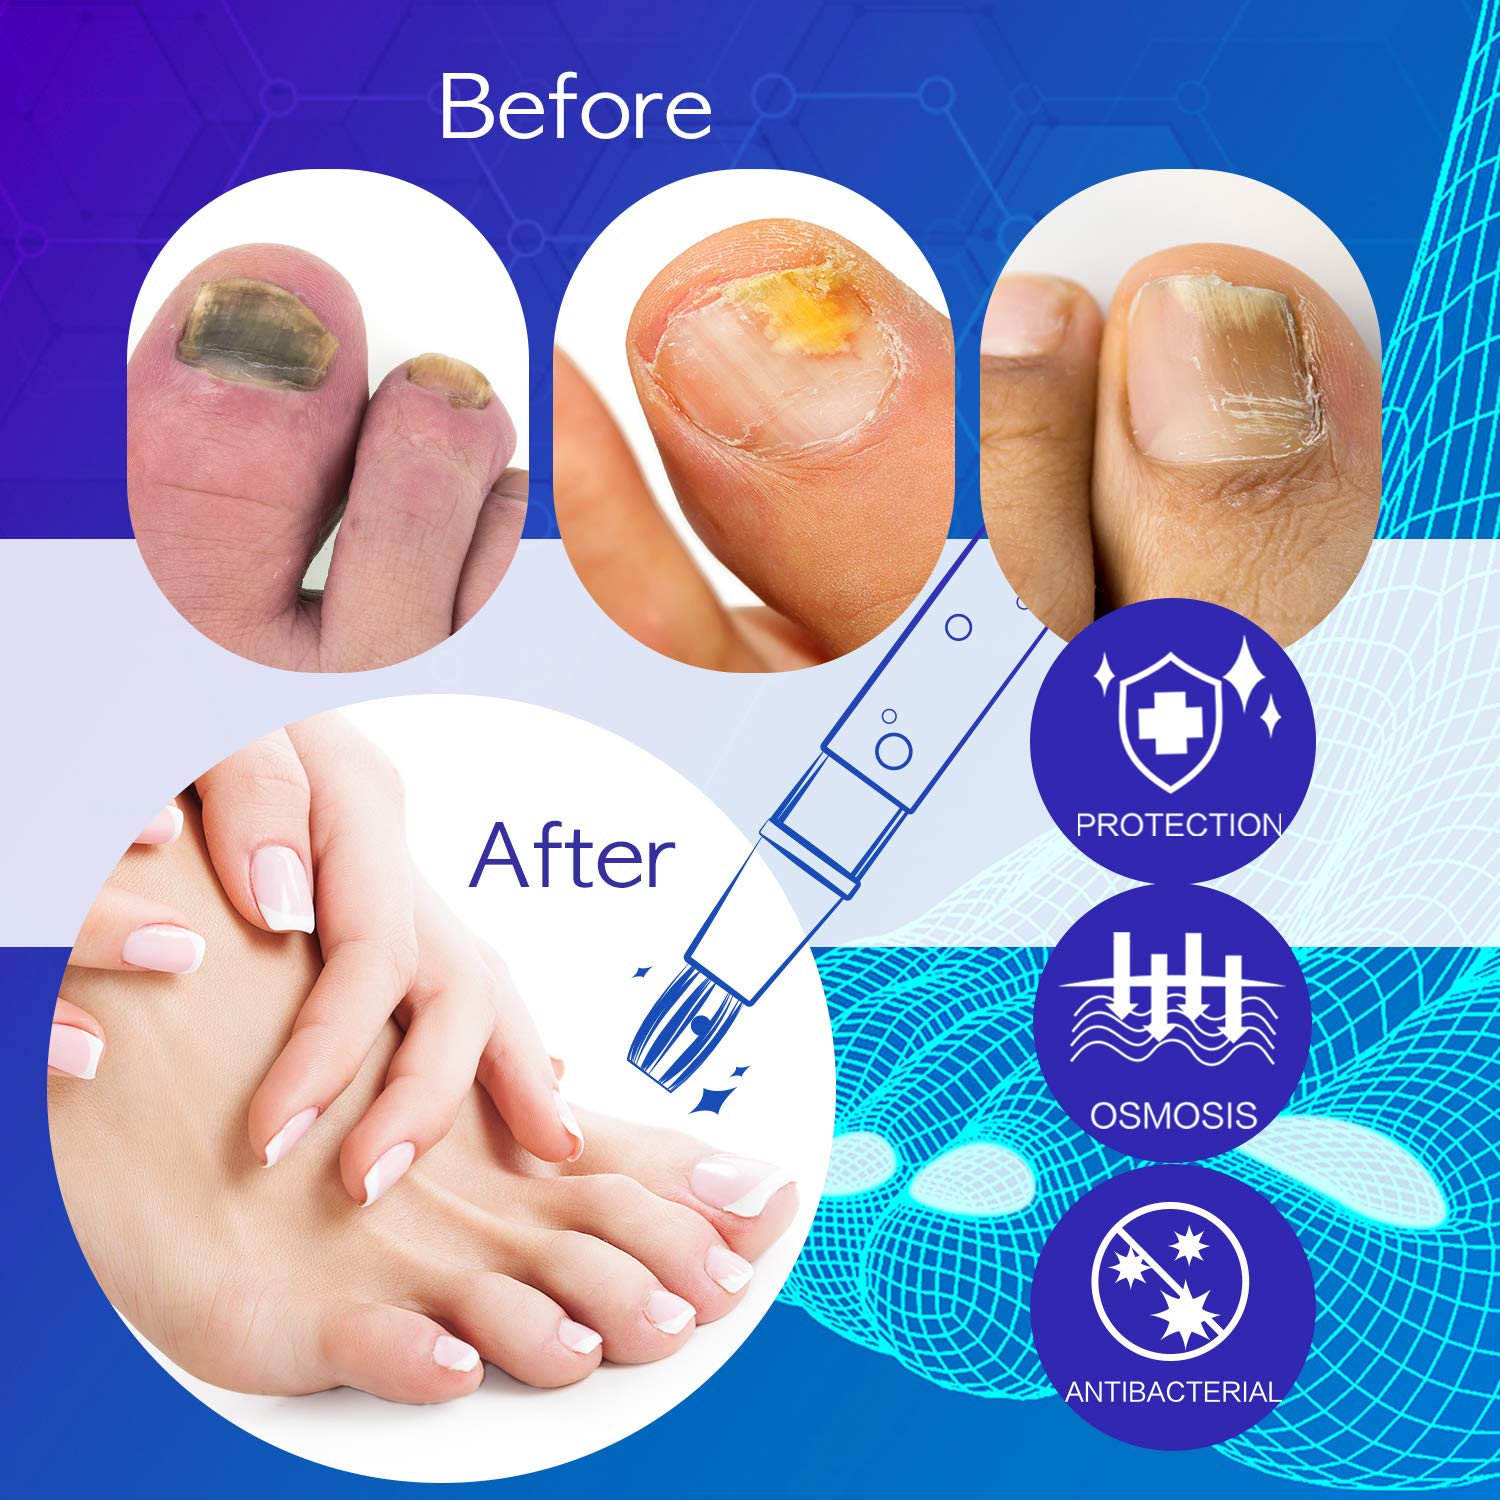 Staying one step ahead of toenail fungus - Harvard Health